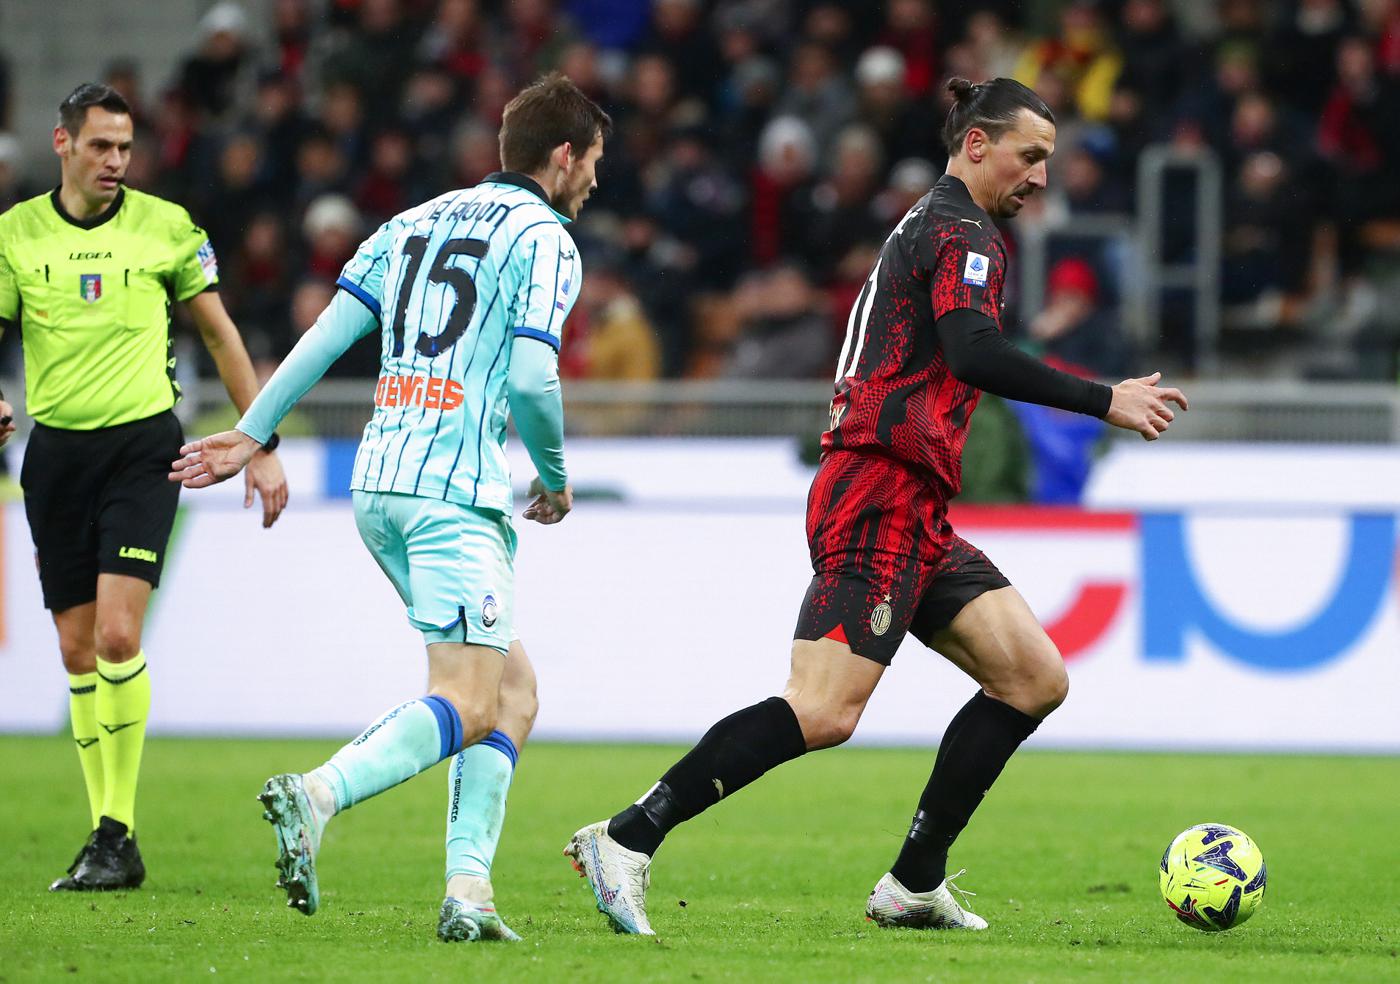 Milan vs Atalanta - 2-0. Italian Championship, round 24. Match review, statistics